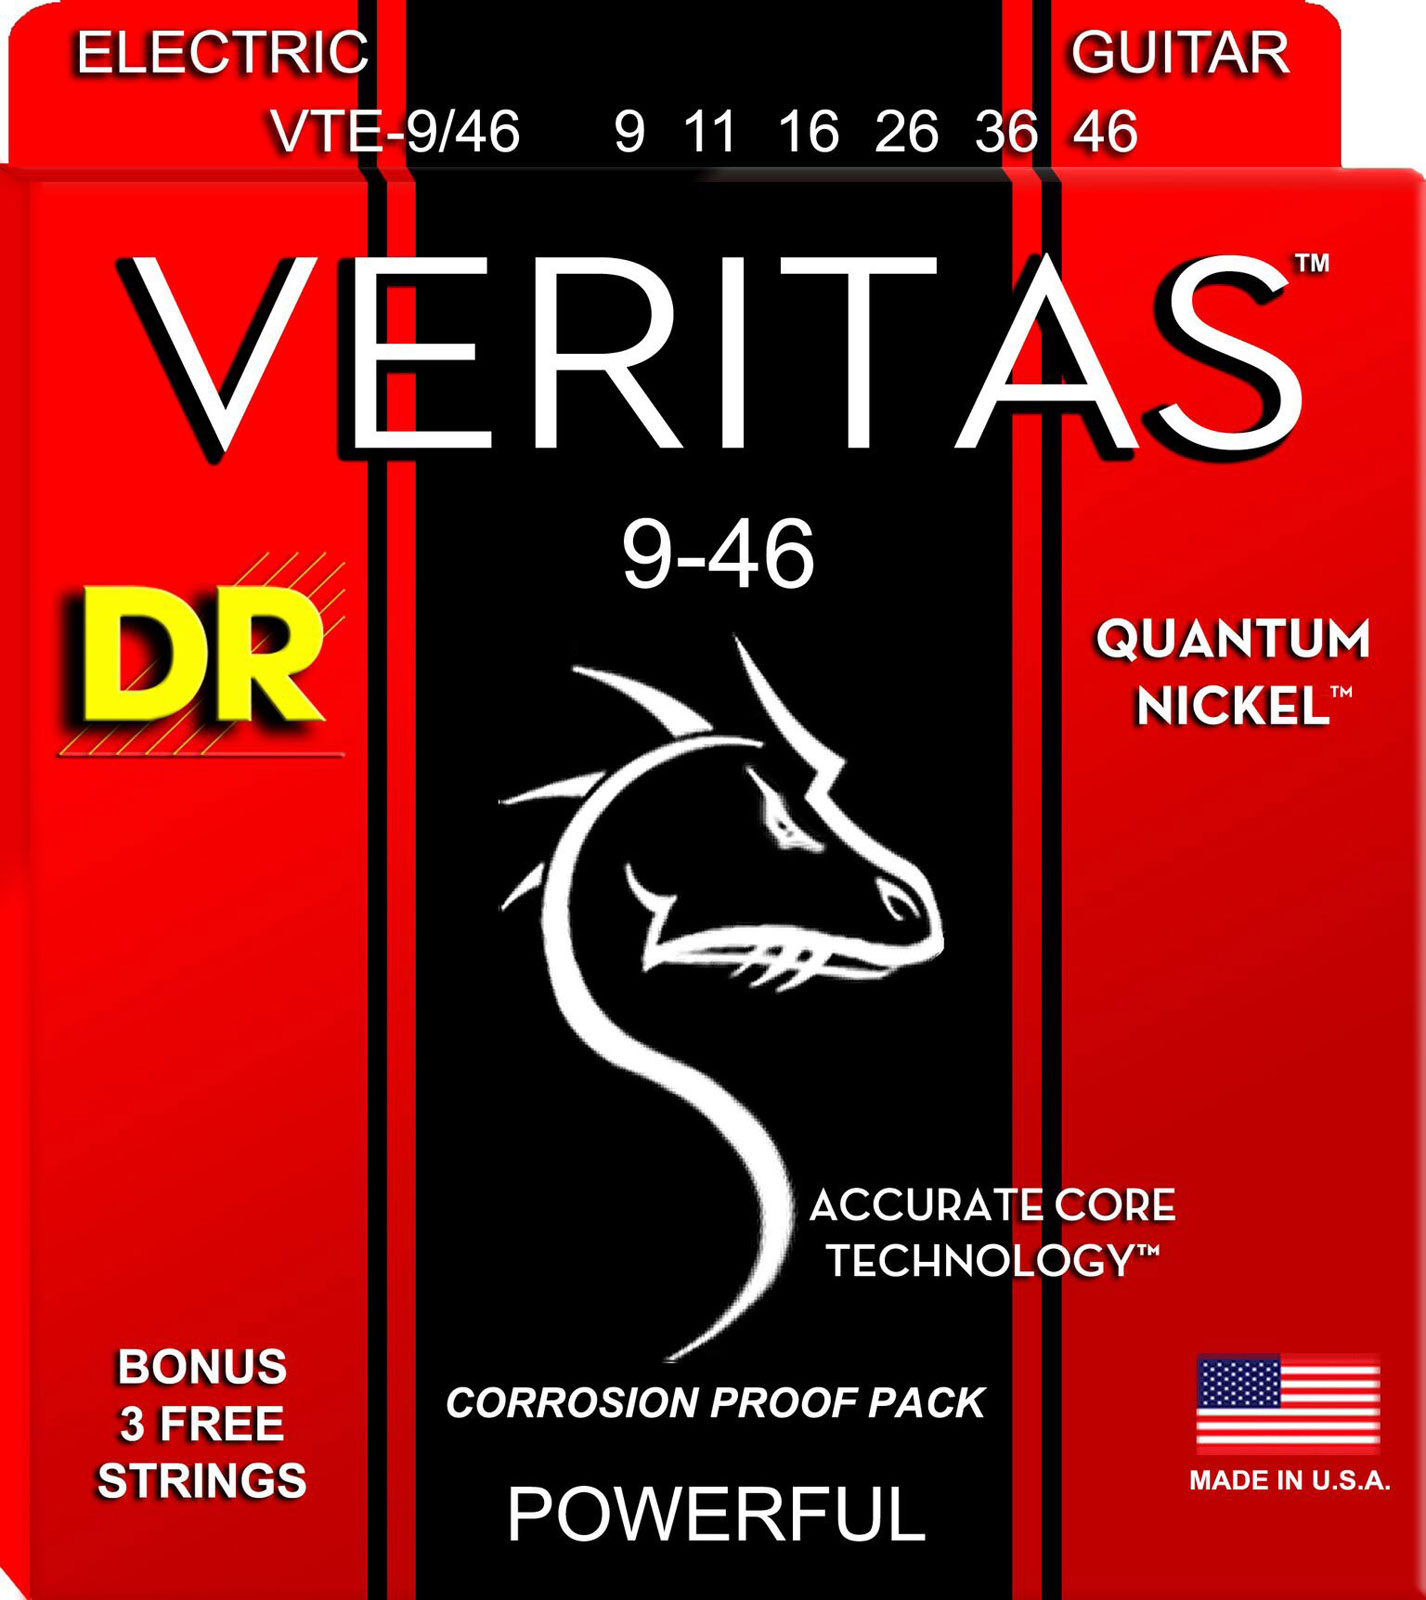 DR STRINGS VTE-9/46 VERITAS 9-46